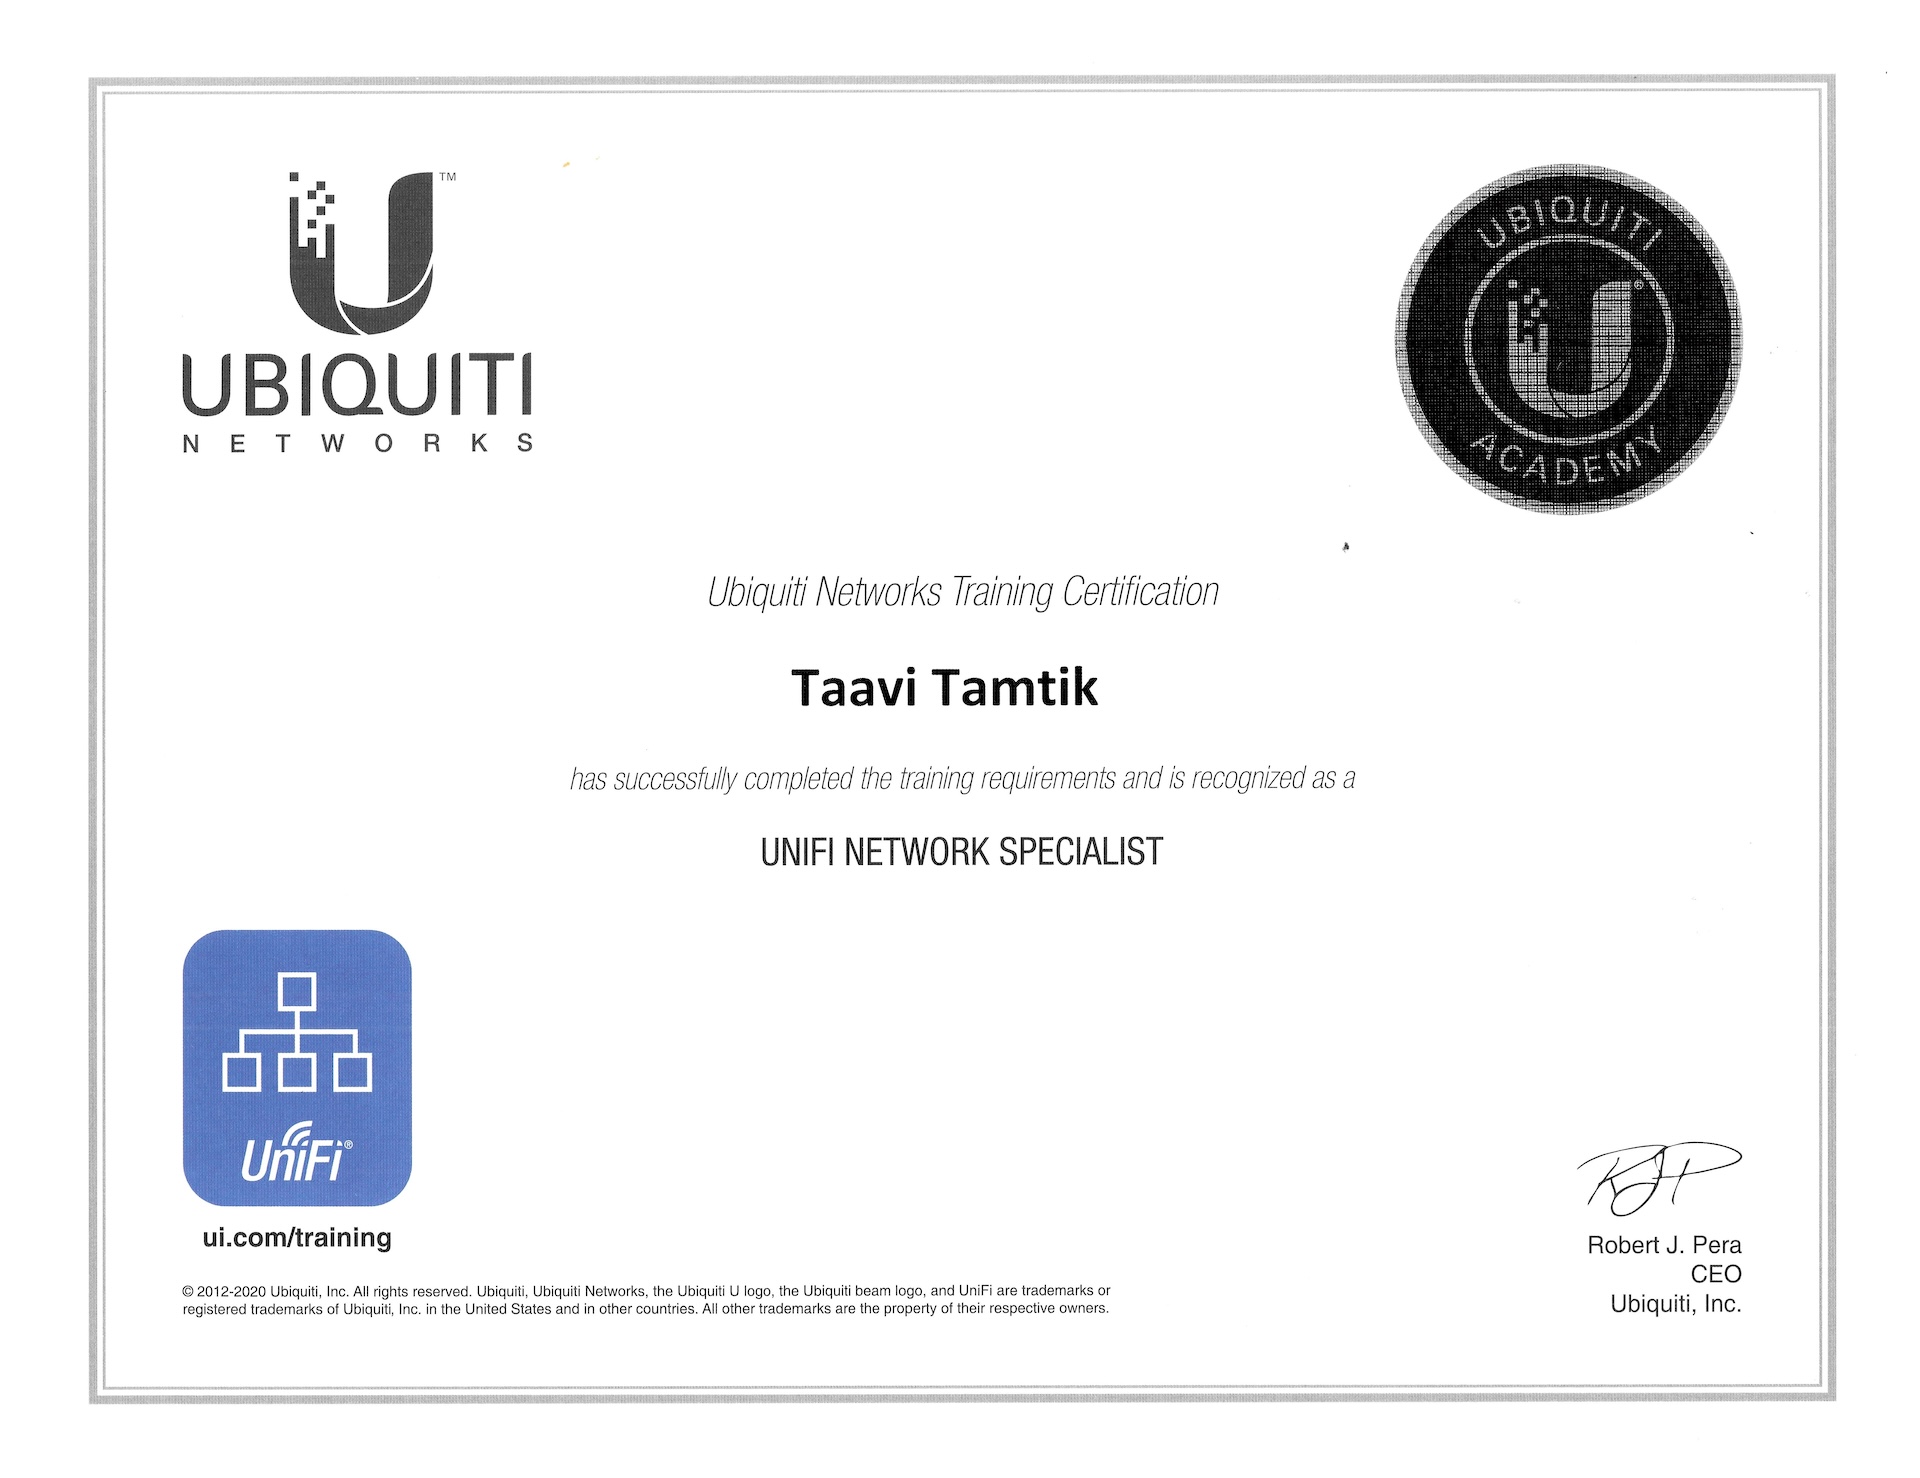 UniFi Network Specialist (UNS) by Ubiquiti